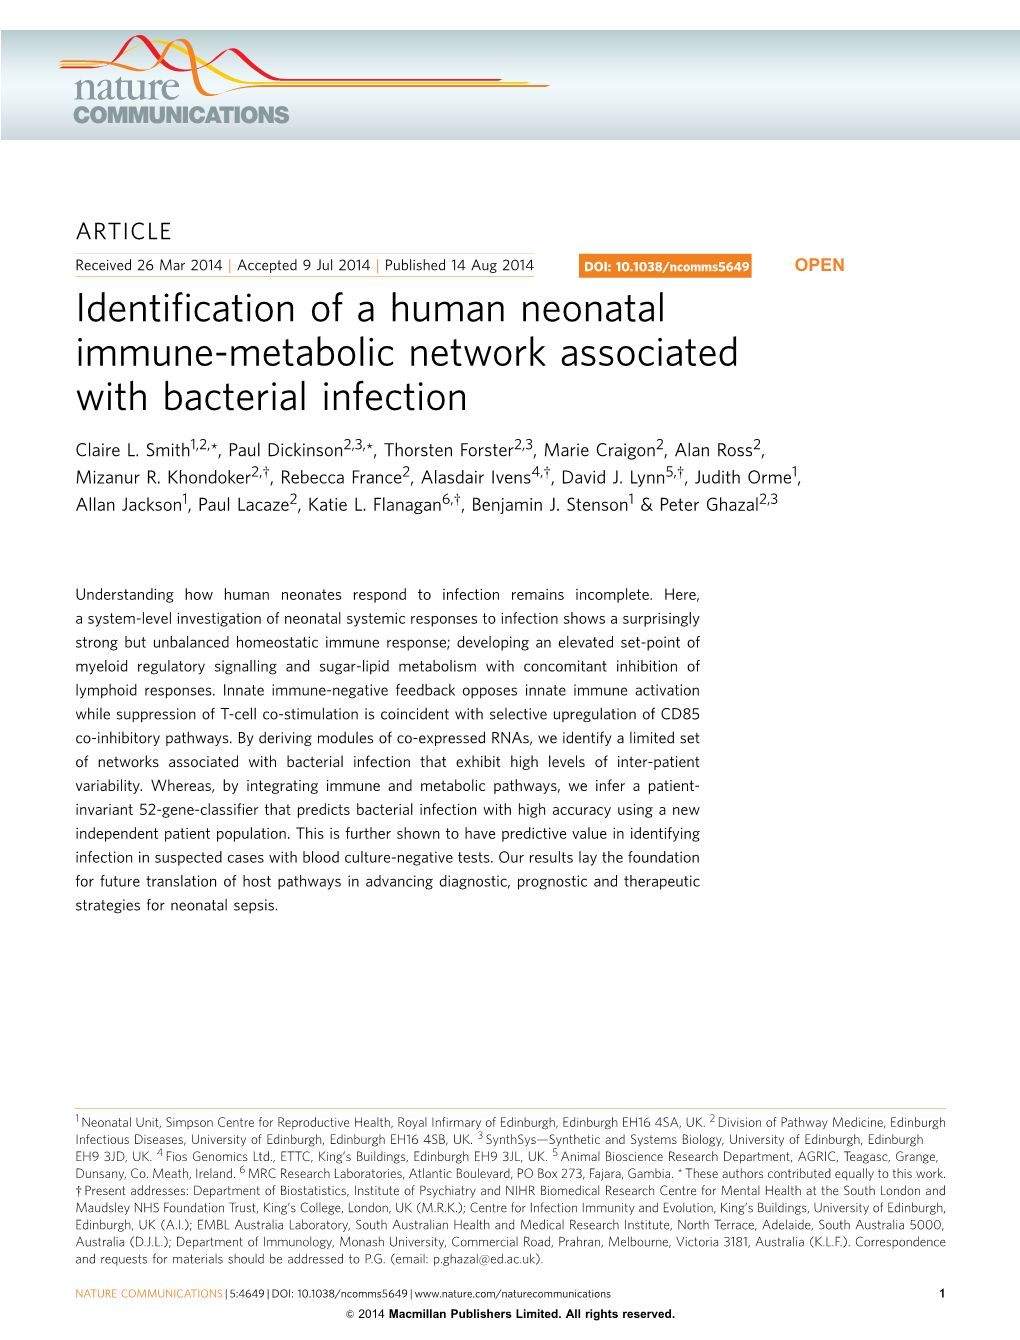 Identification of a Human Neonatal Immune-Metabolic Network